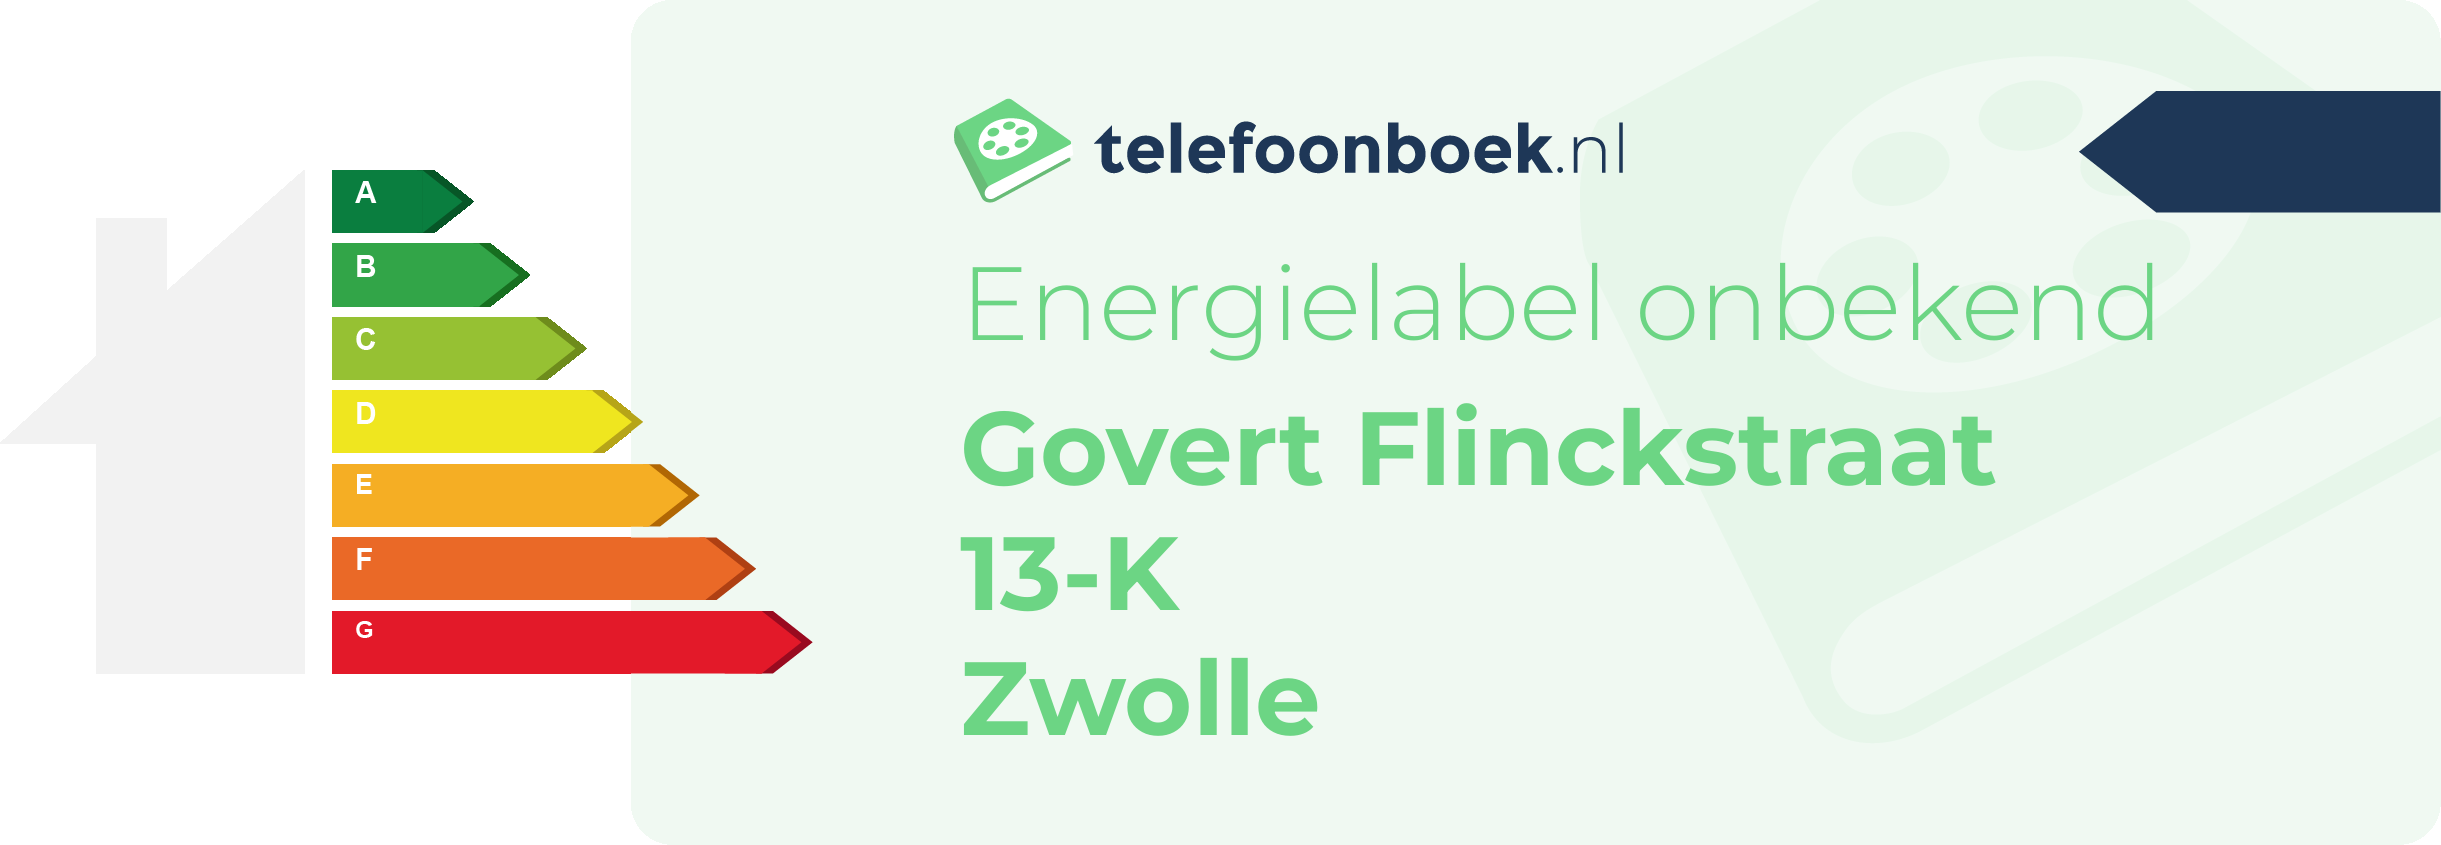 Energielabel Govert Flinckstraat 13-K Zwolle